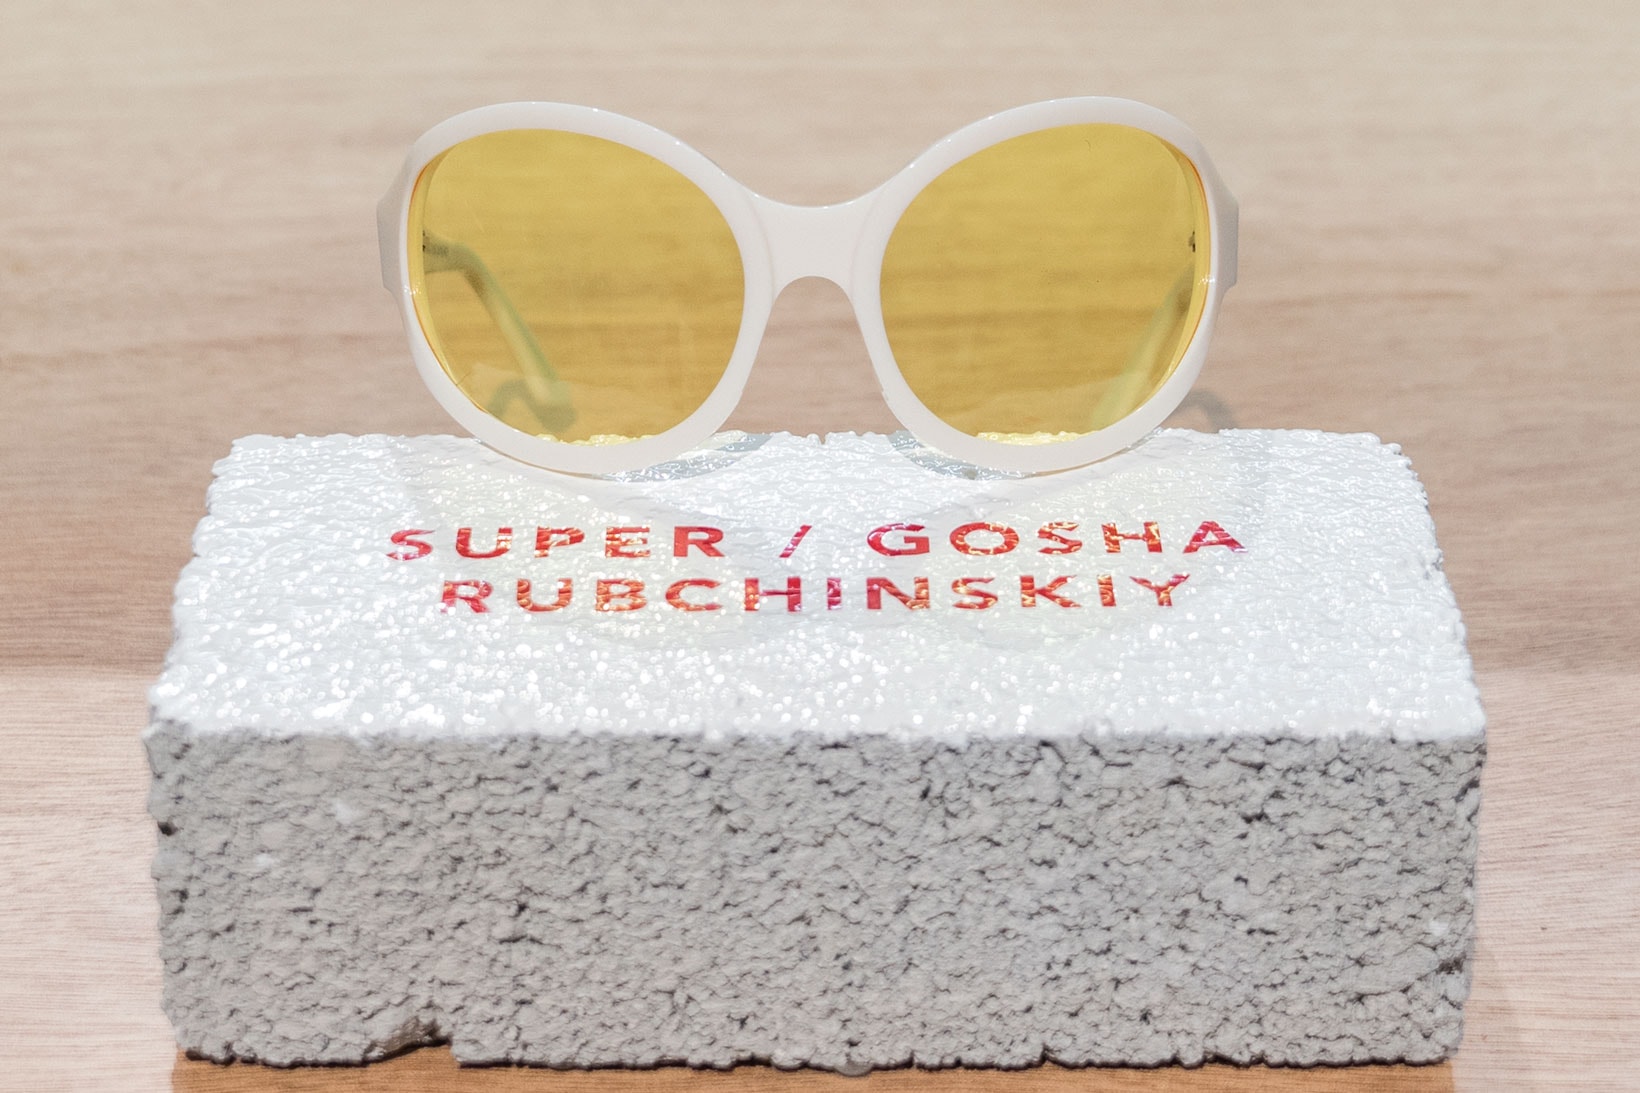 Gosha Rubchinskiy SUPER by RETROSUPERFUTURE